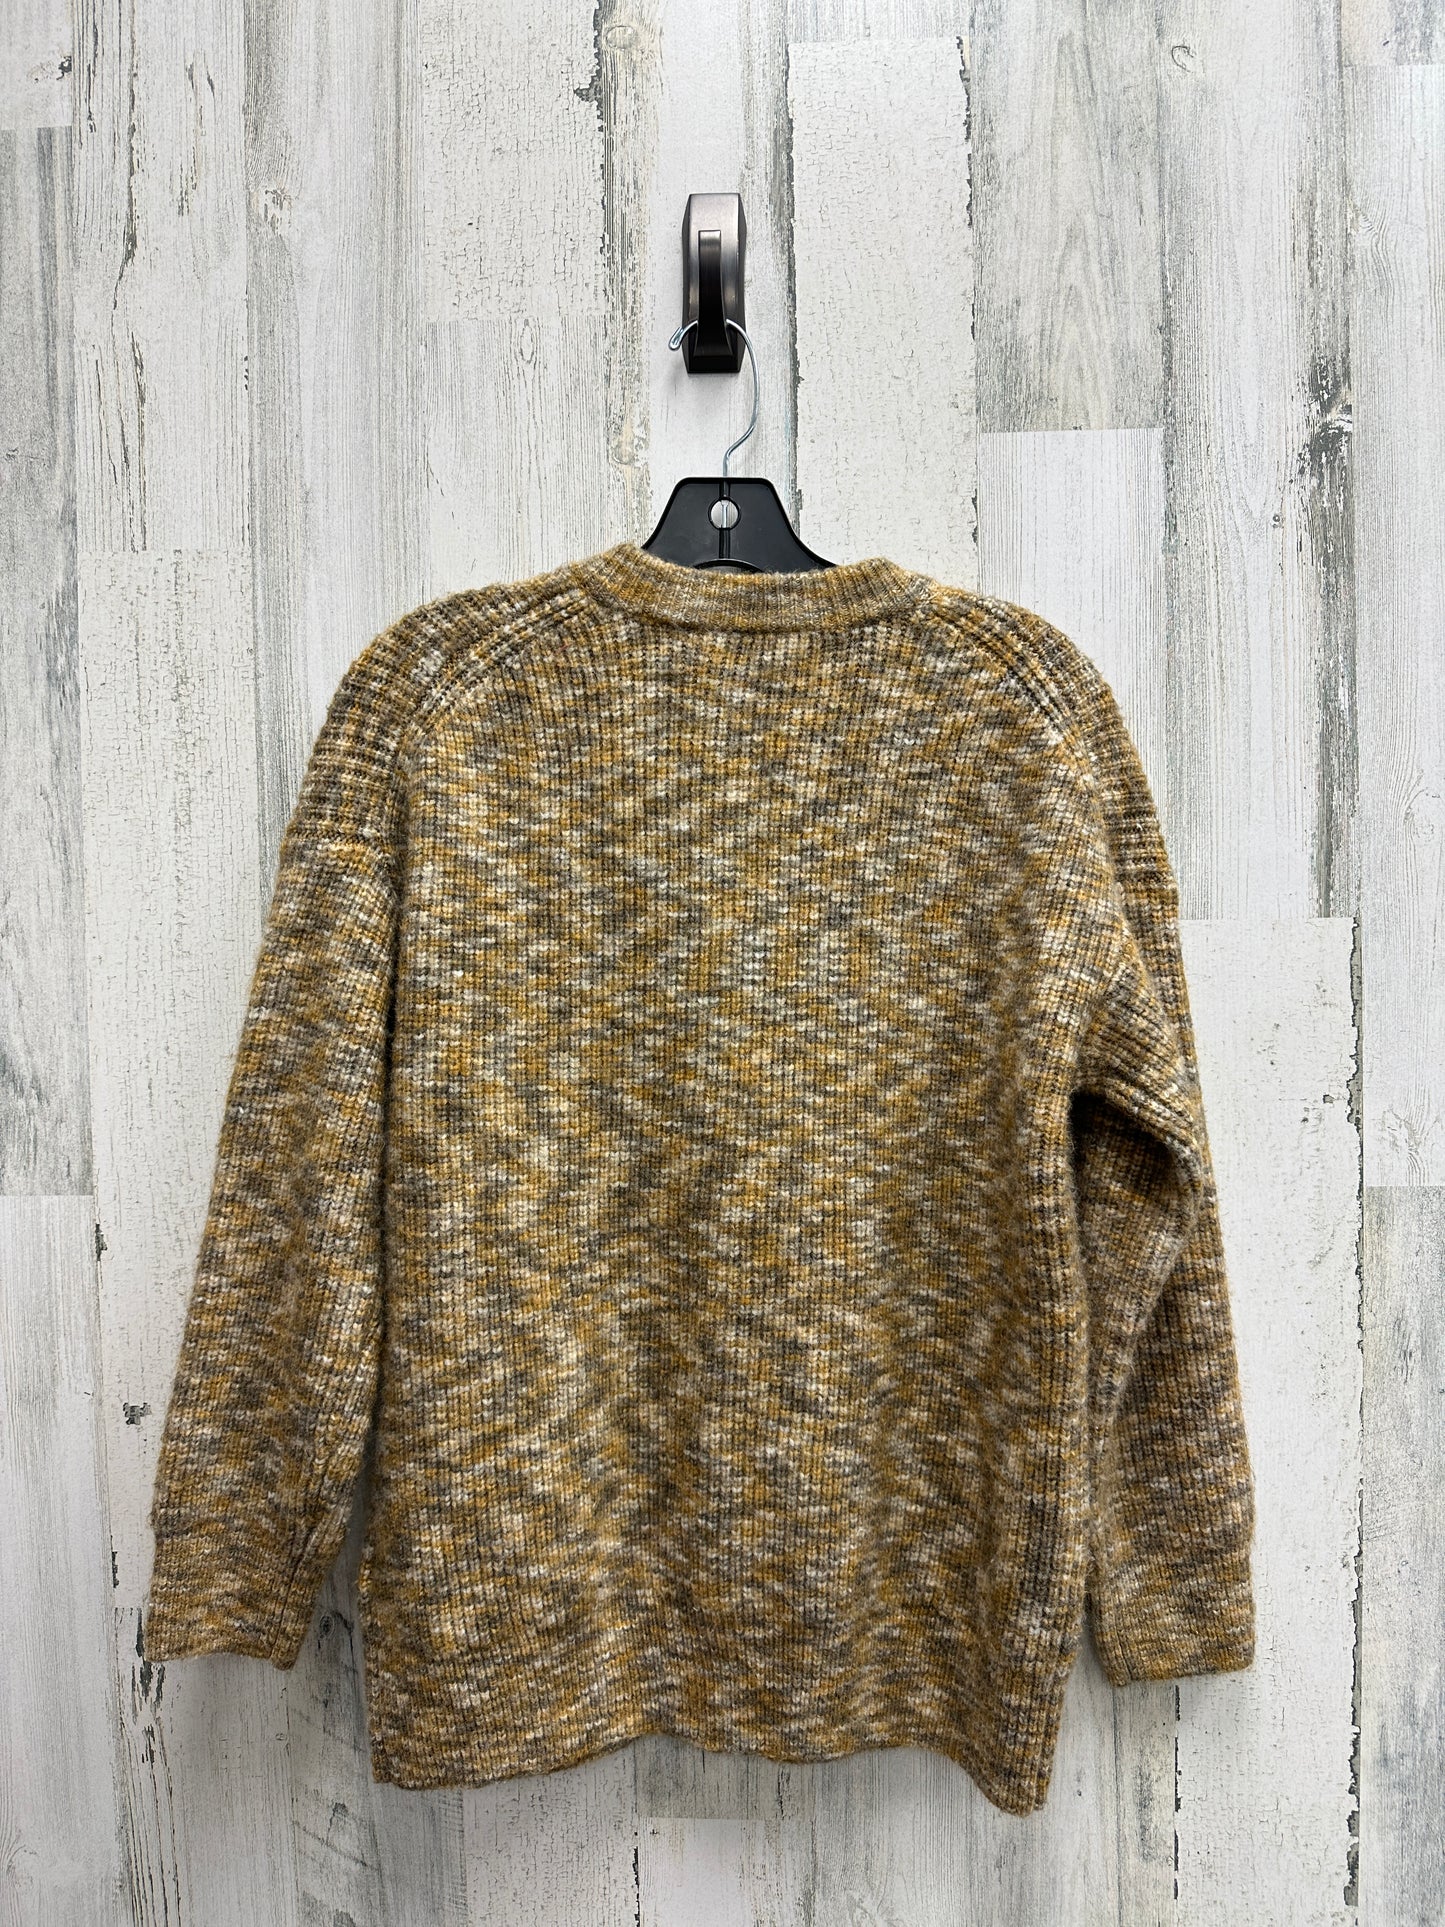 Sweater By Madewell  Size: Xxs